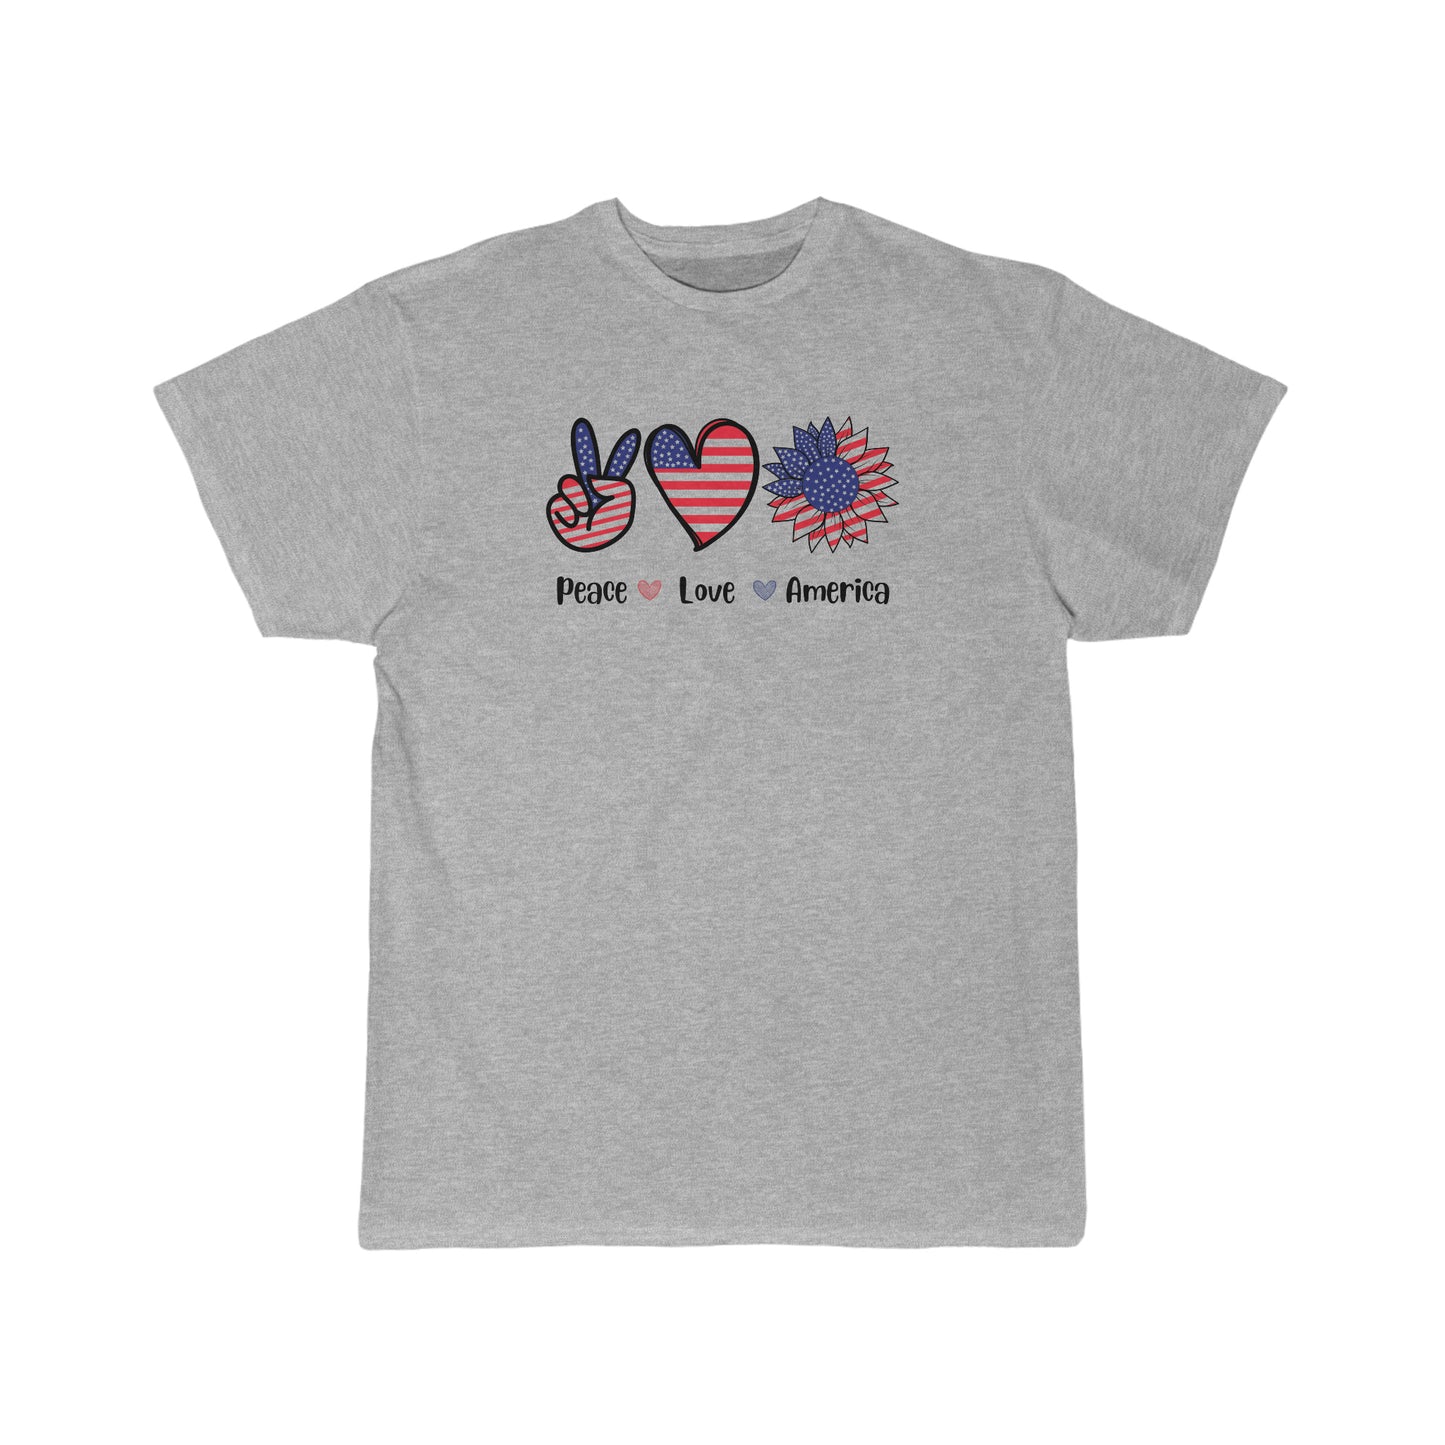 Peace Love America, USA Flag Shirt, 4th of July Shirt, Big USA T-shirt, USA Comfort Colors Shirt, Comfort Colors USA Flag Tee, USA Comfort Colors Tee, Usa Shirt Men's Short Sleeve Tee